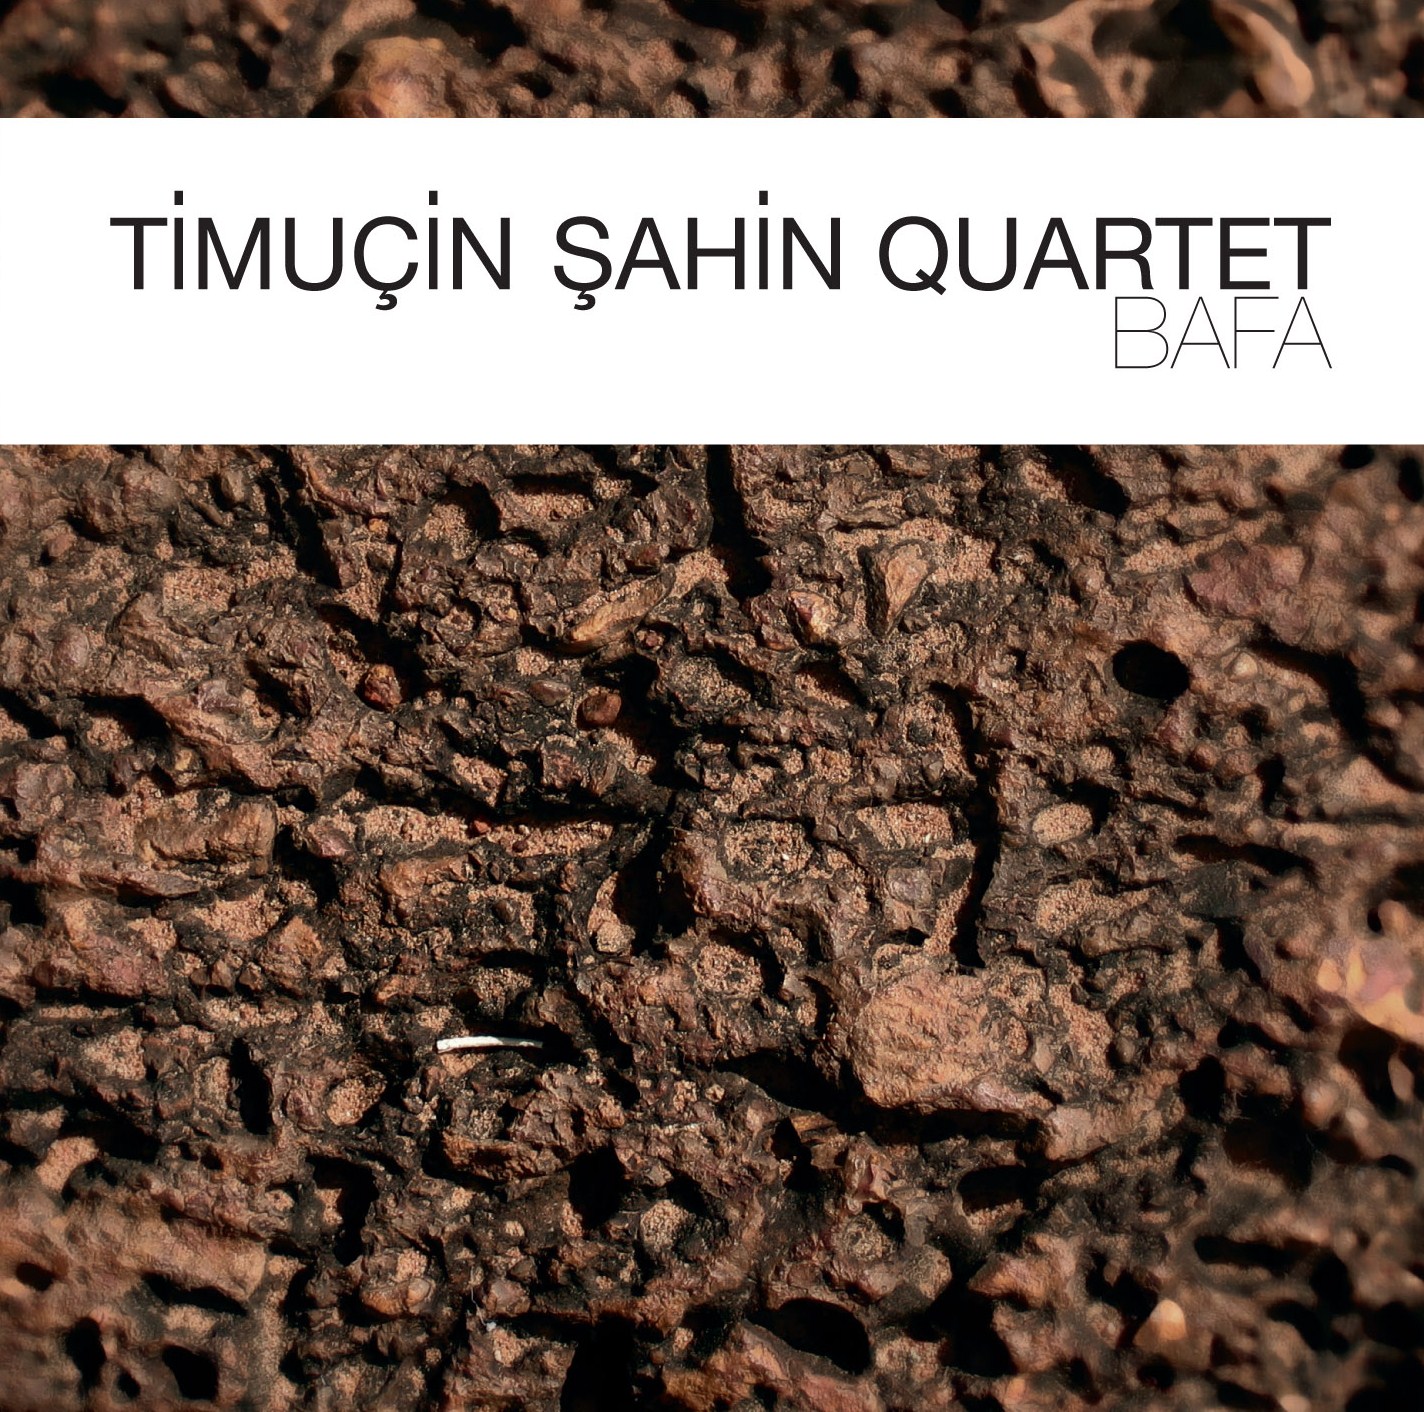 Timuçin Şahin Quartet Bafa